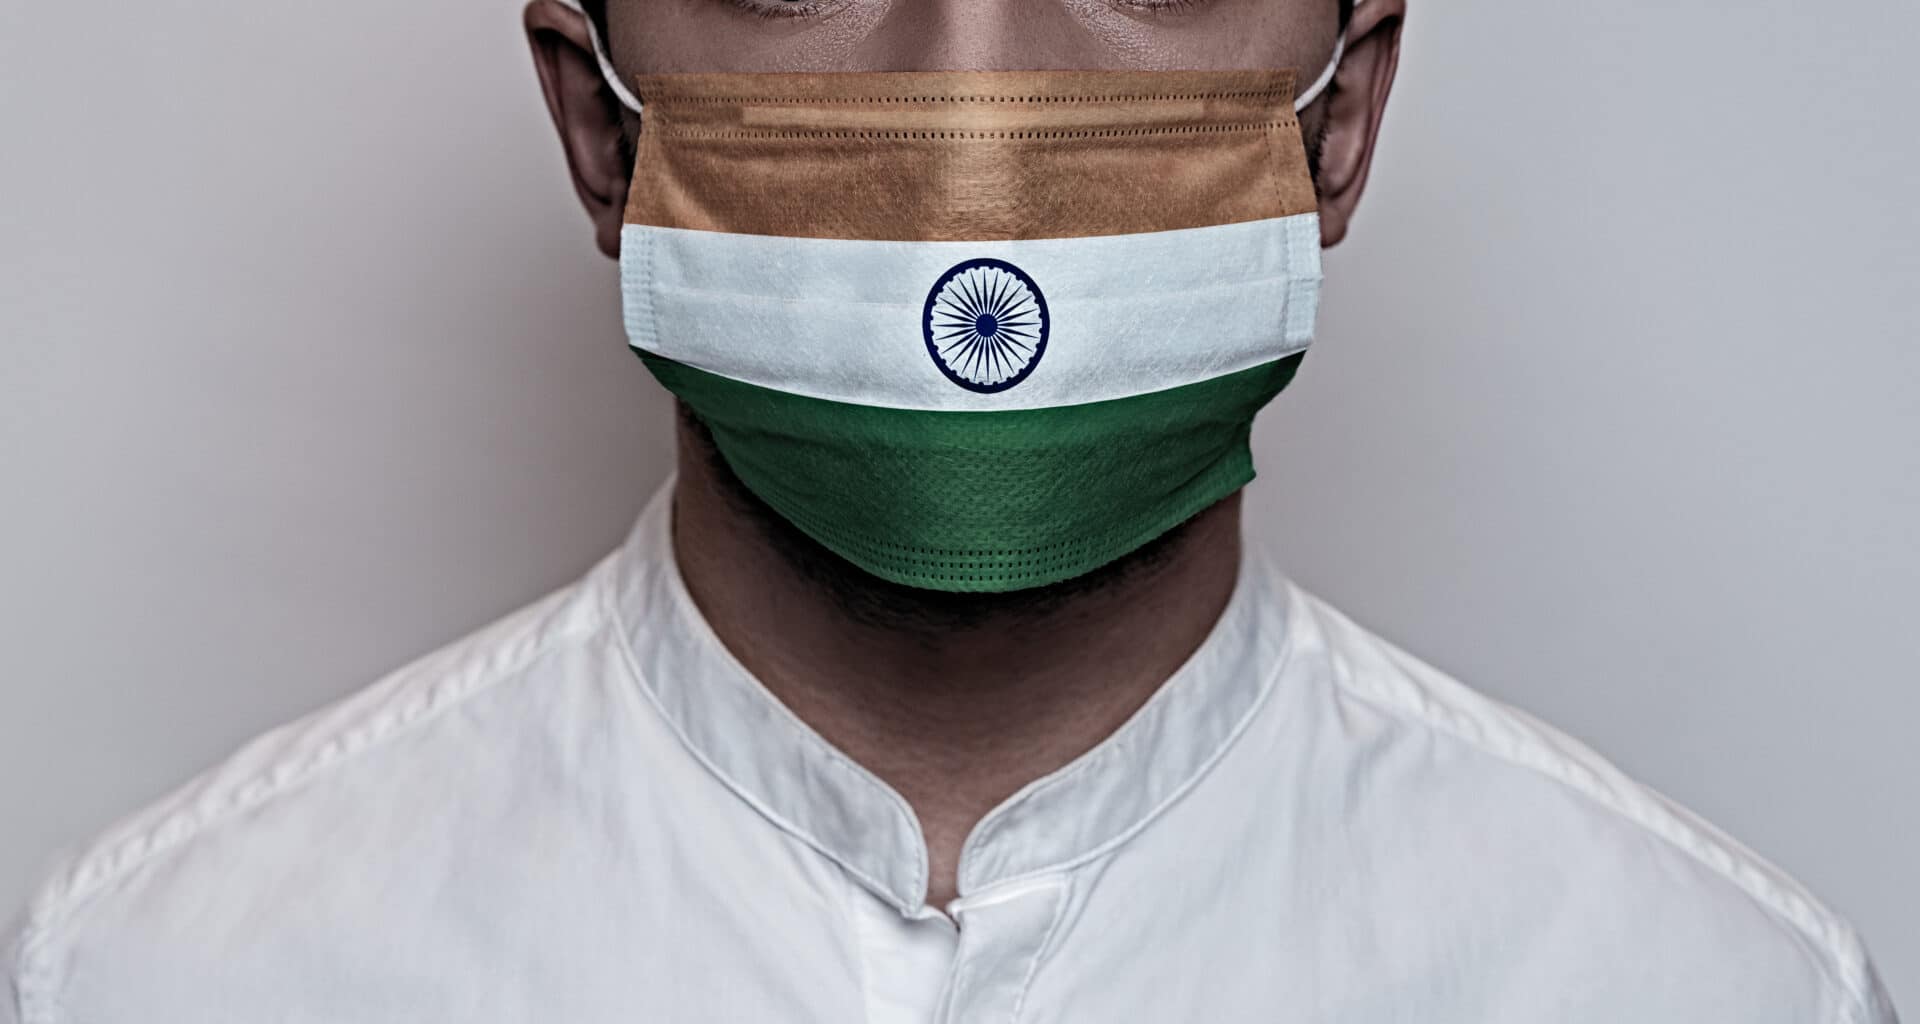 Indiano usando máscara